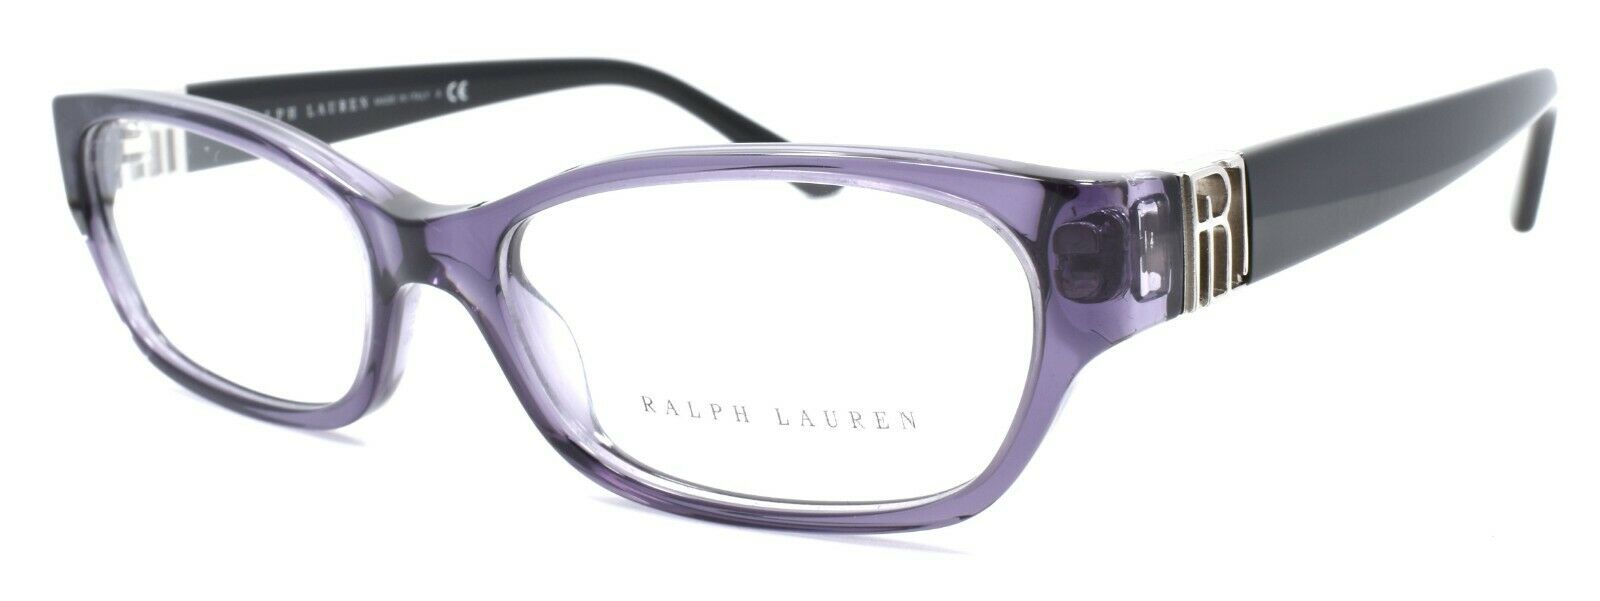 1-Ralph Lauren RL6081 5242 Women's Eyeglasses Frames 52-16-140 Transparent Violet-713132375266-IKSpecs